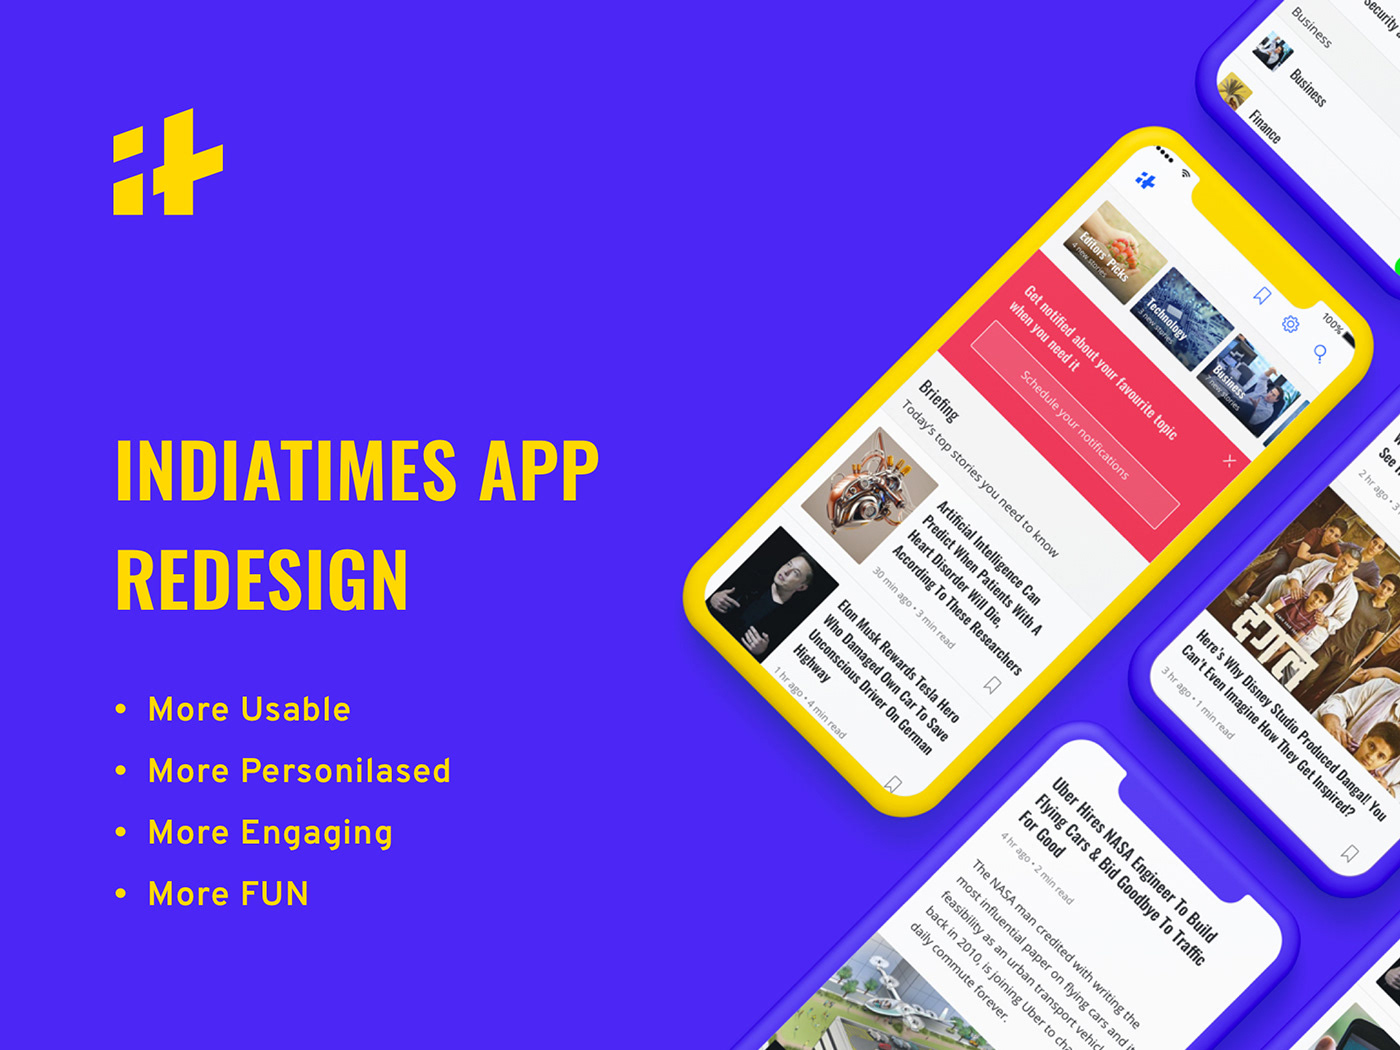 UI news media India Times concept UX Portfolio  mobile app design interaction Interface prateek gupta